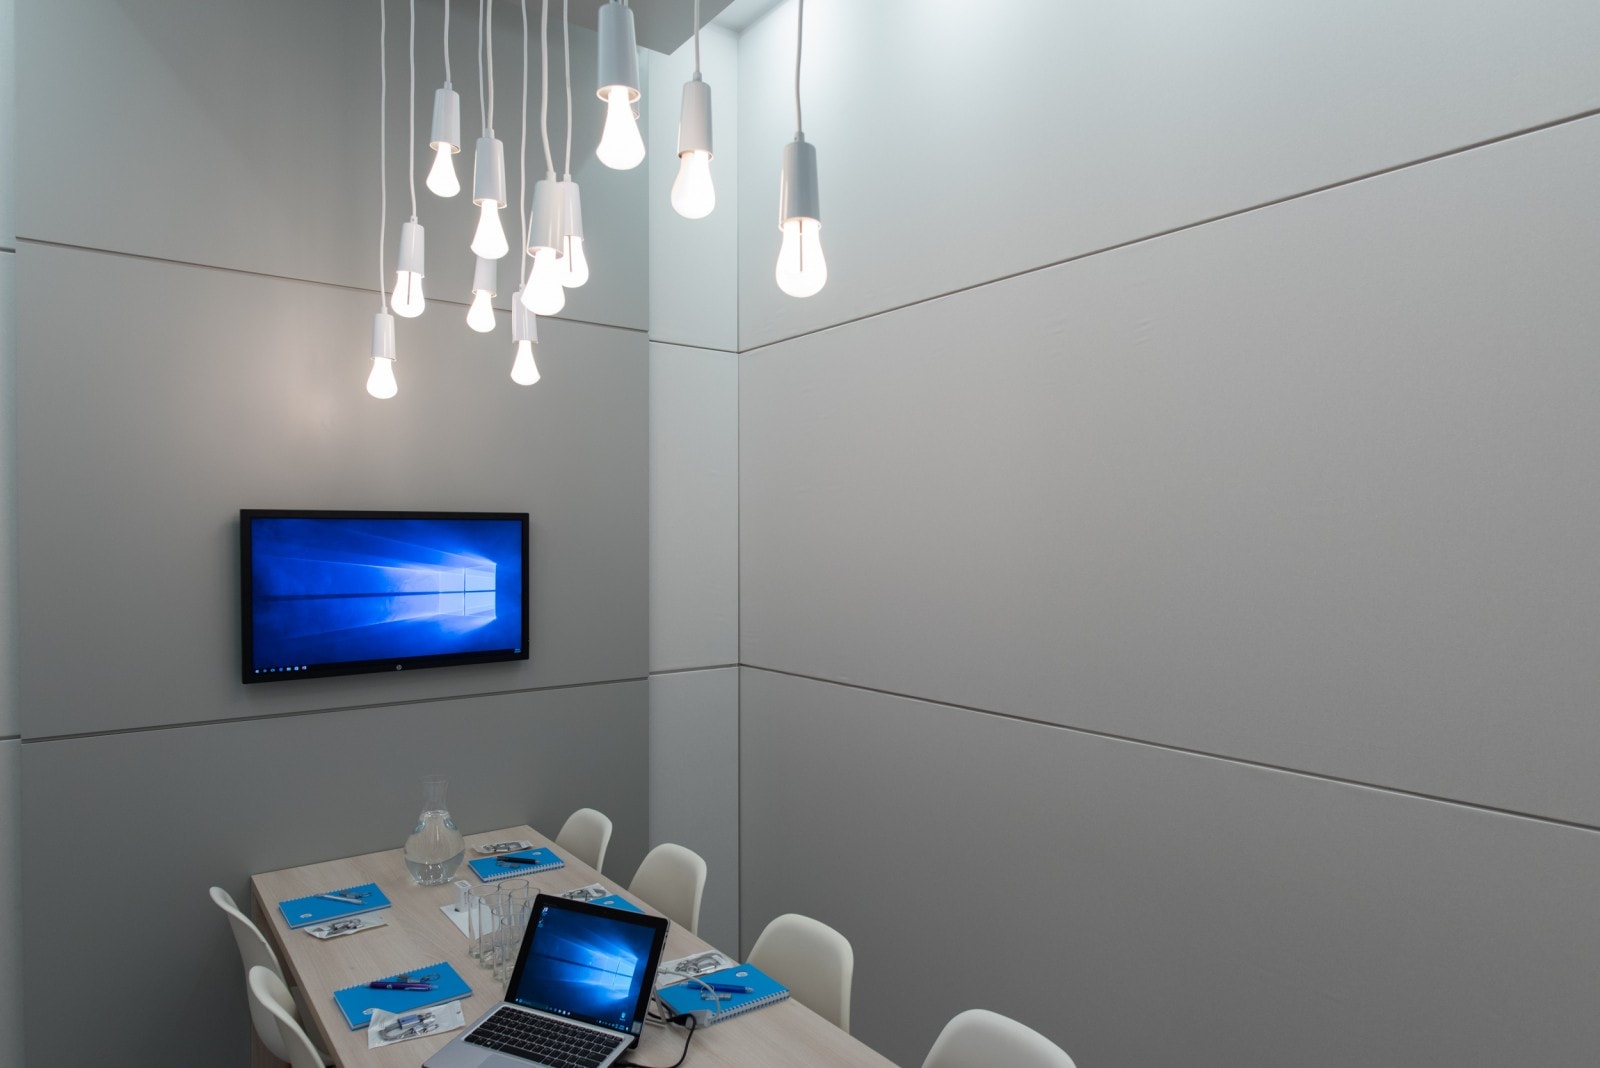 Modern office pod with falling string light-bulbs